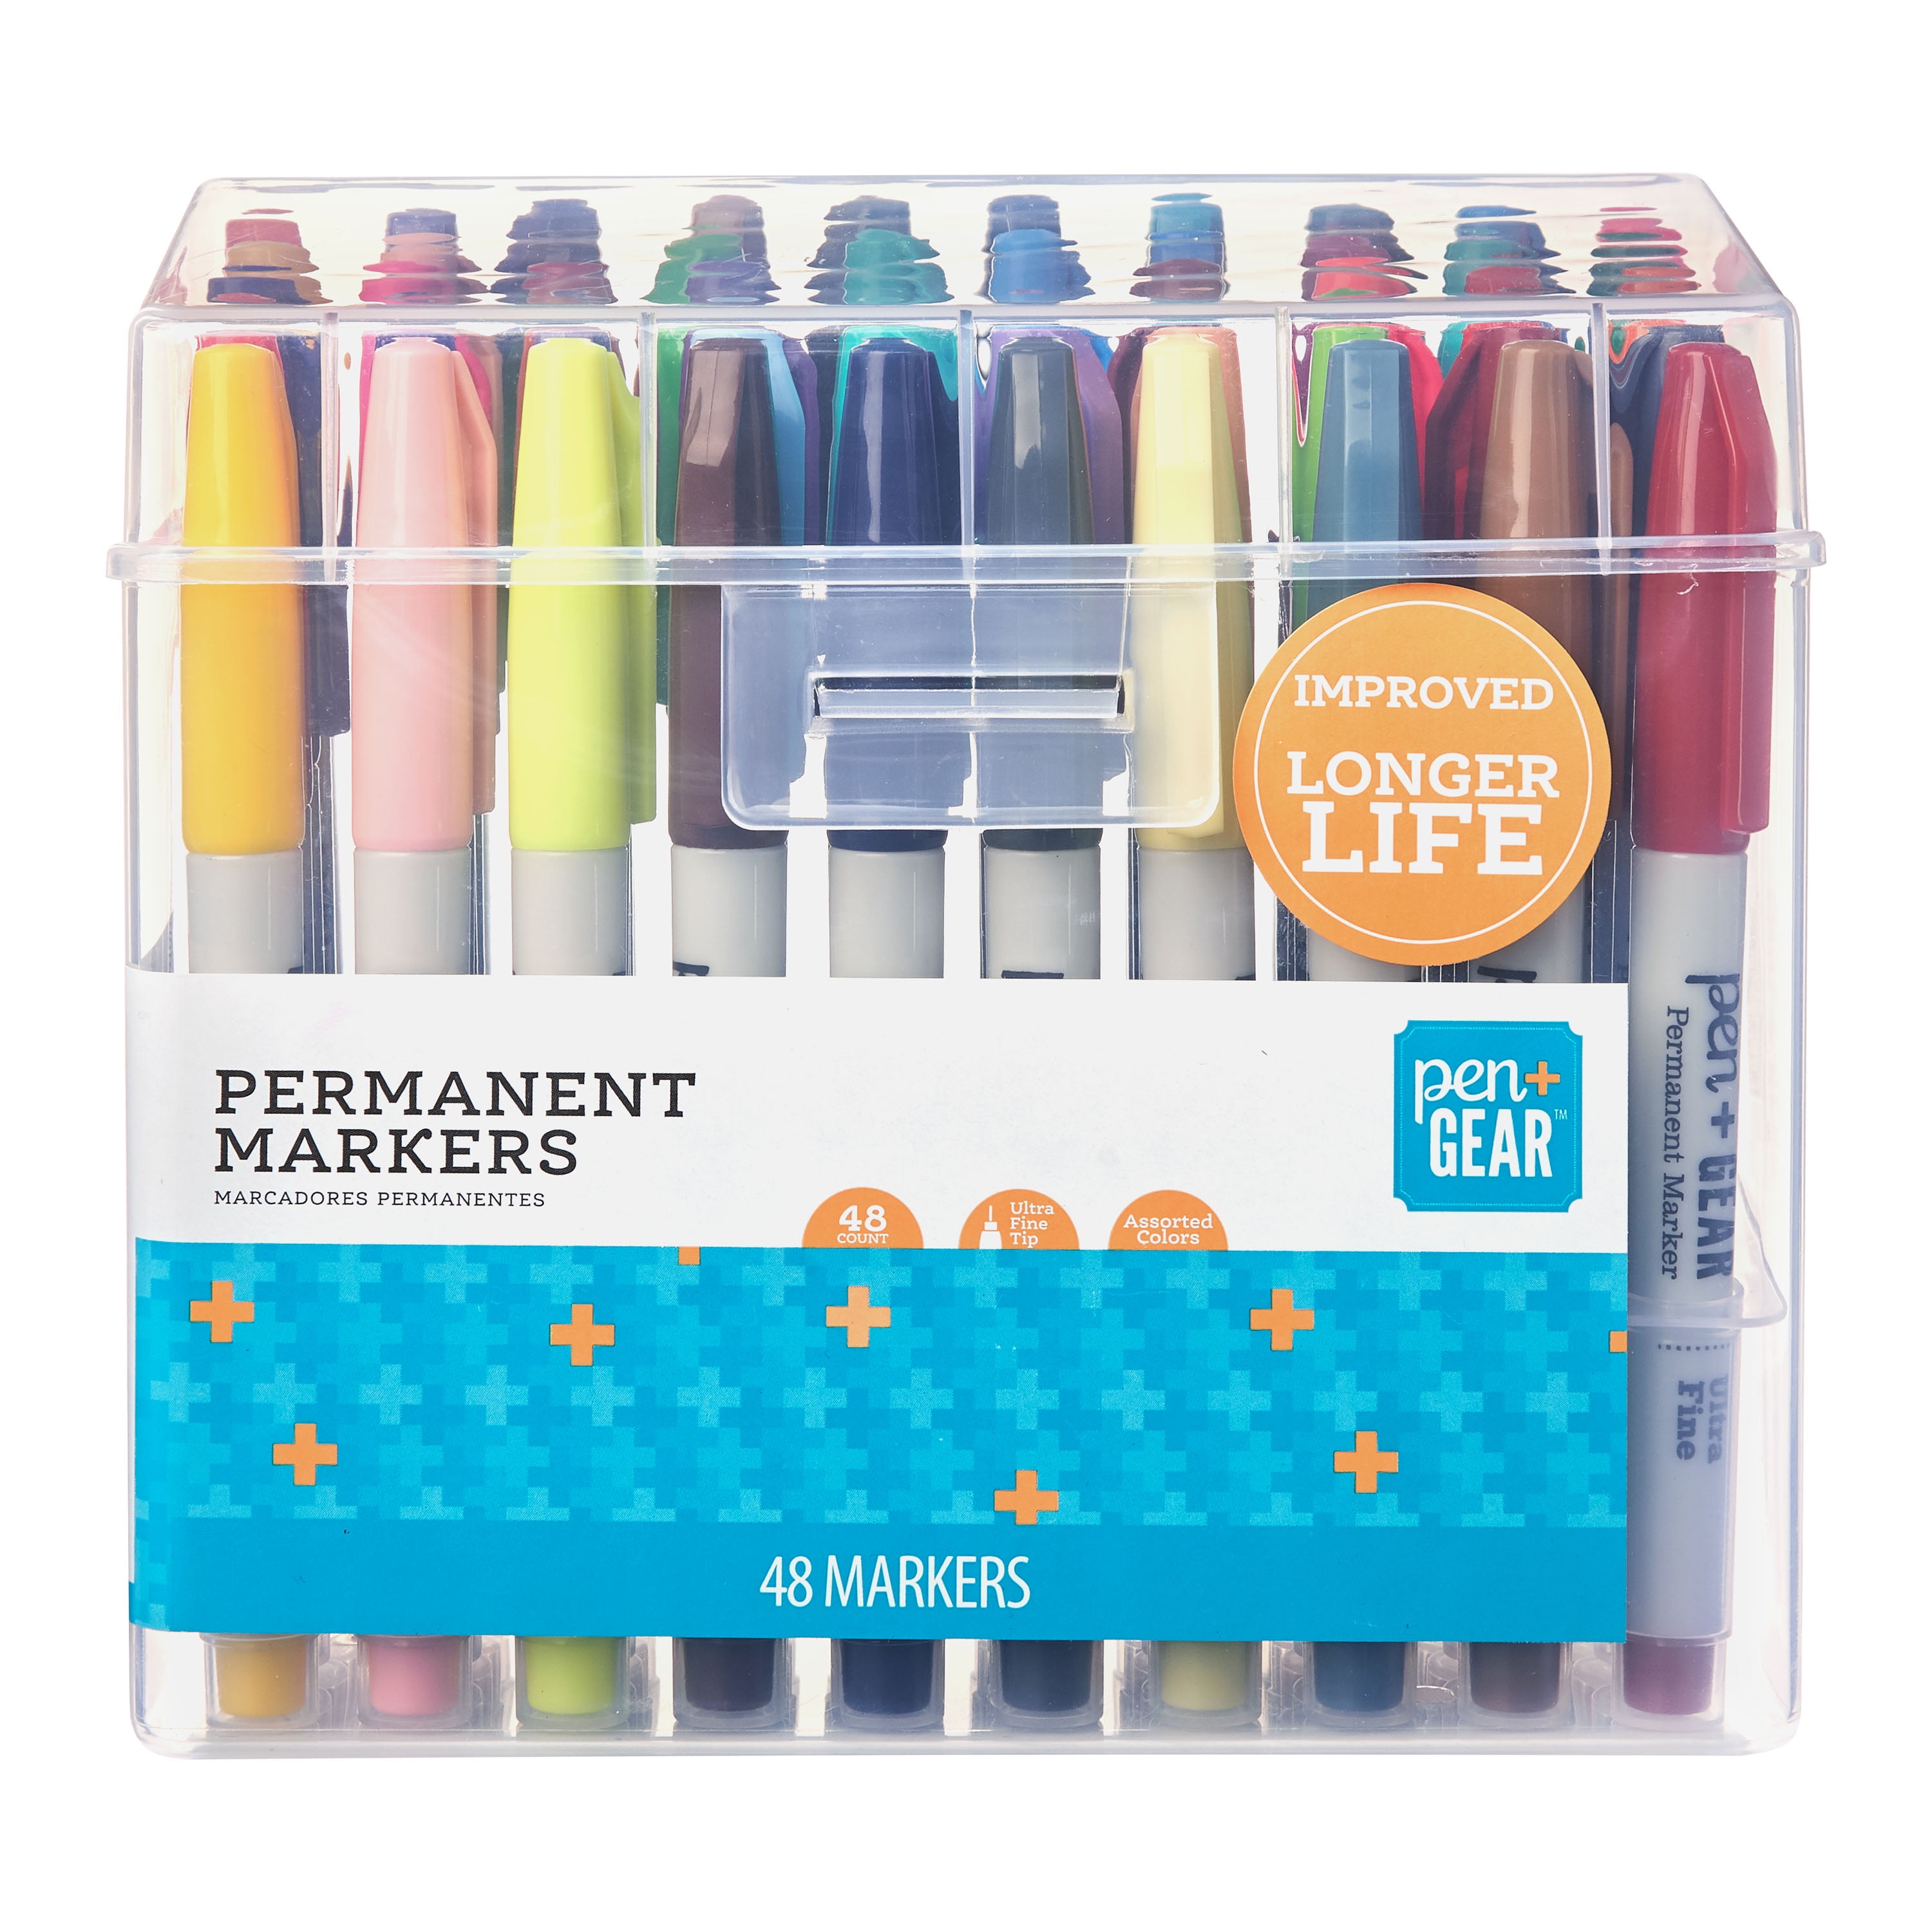 Pen+Gear Permanent Markers Ultra Fine Tip 60ct Colors Interlocking Storage Case 